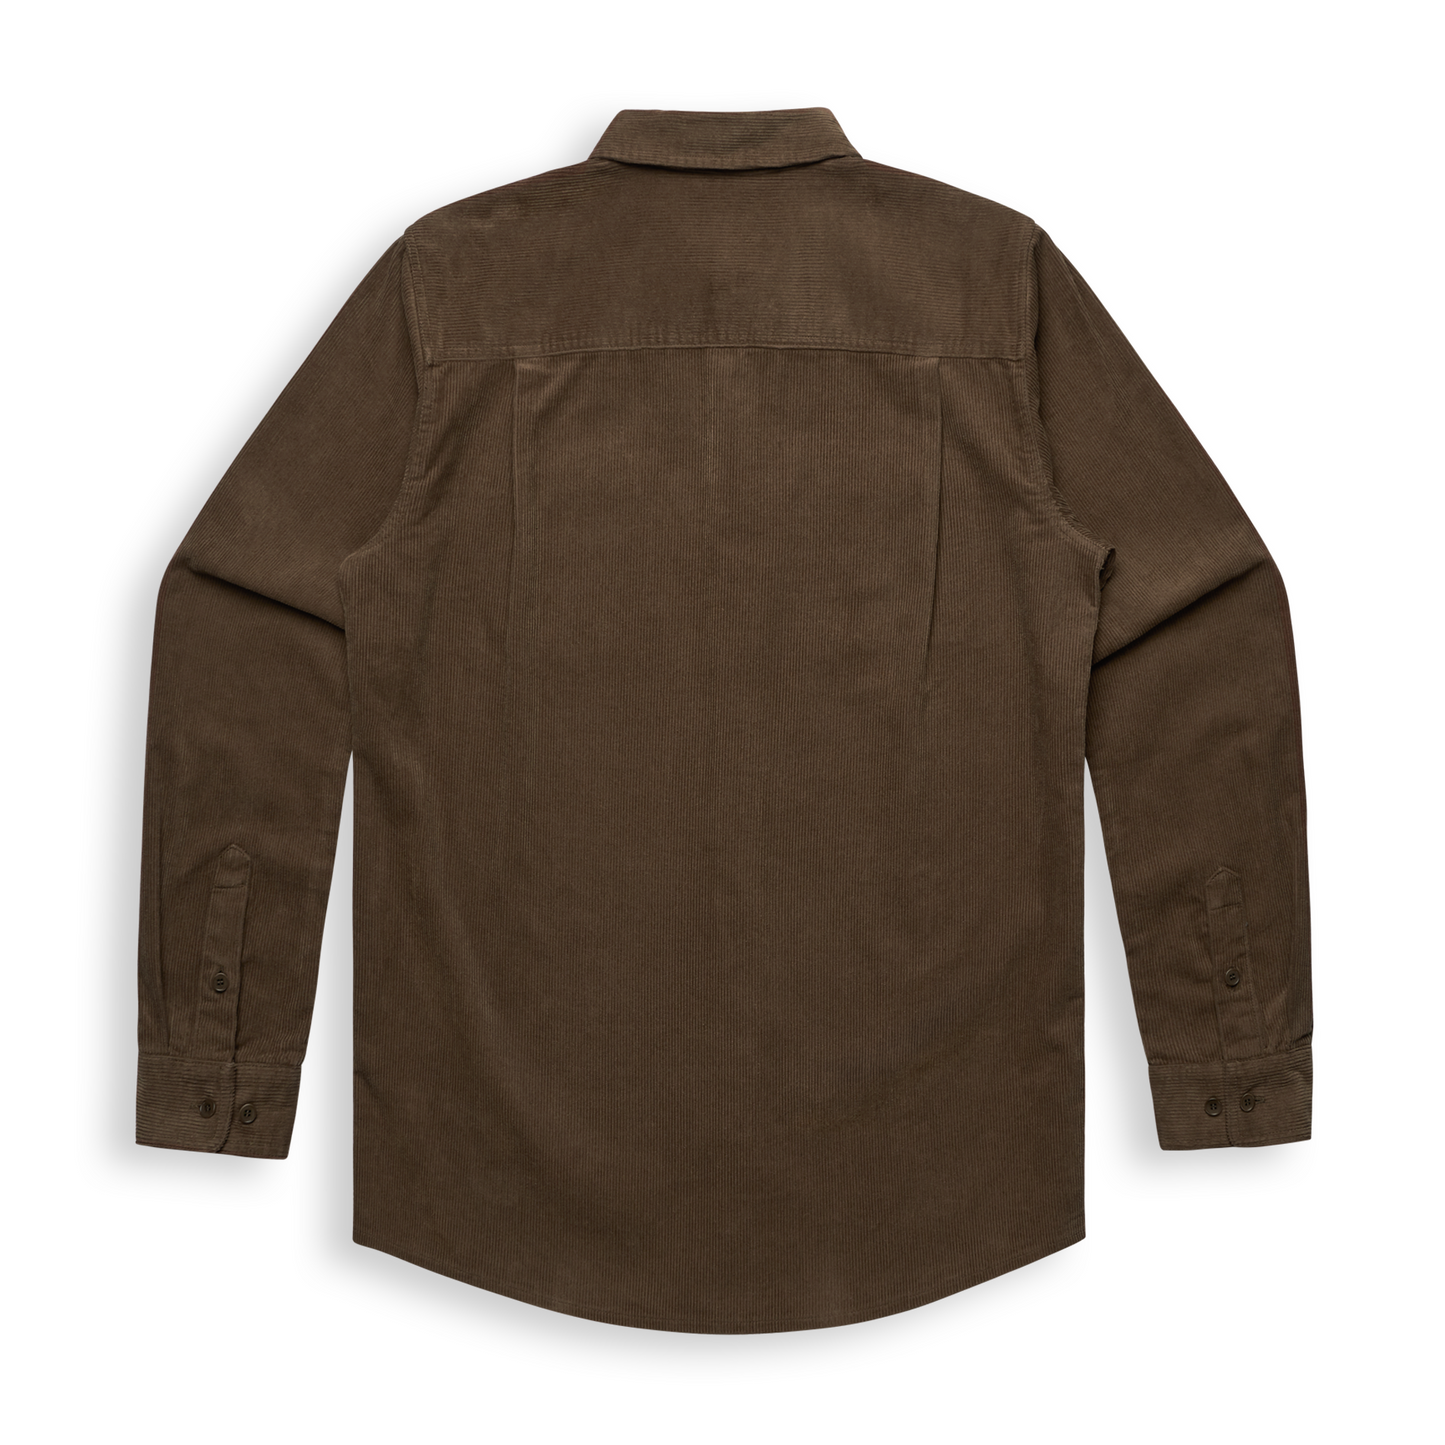 OFF TRACK Corduroy Button Down Shirt - Brown / Black / Army Green